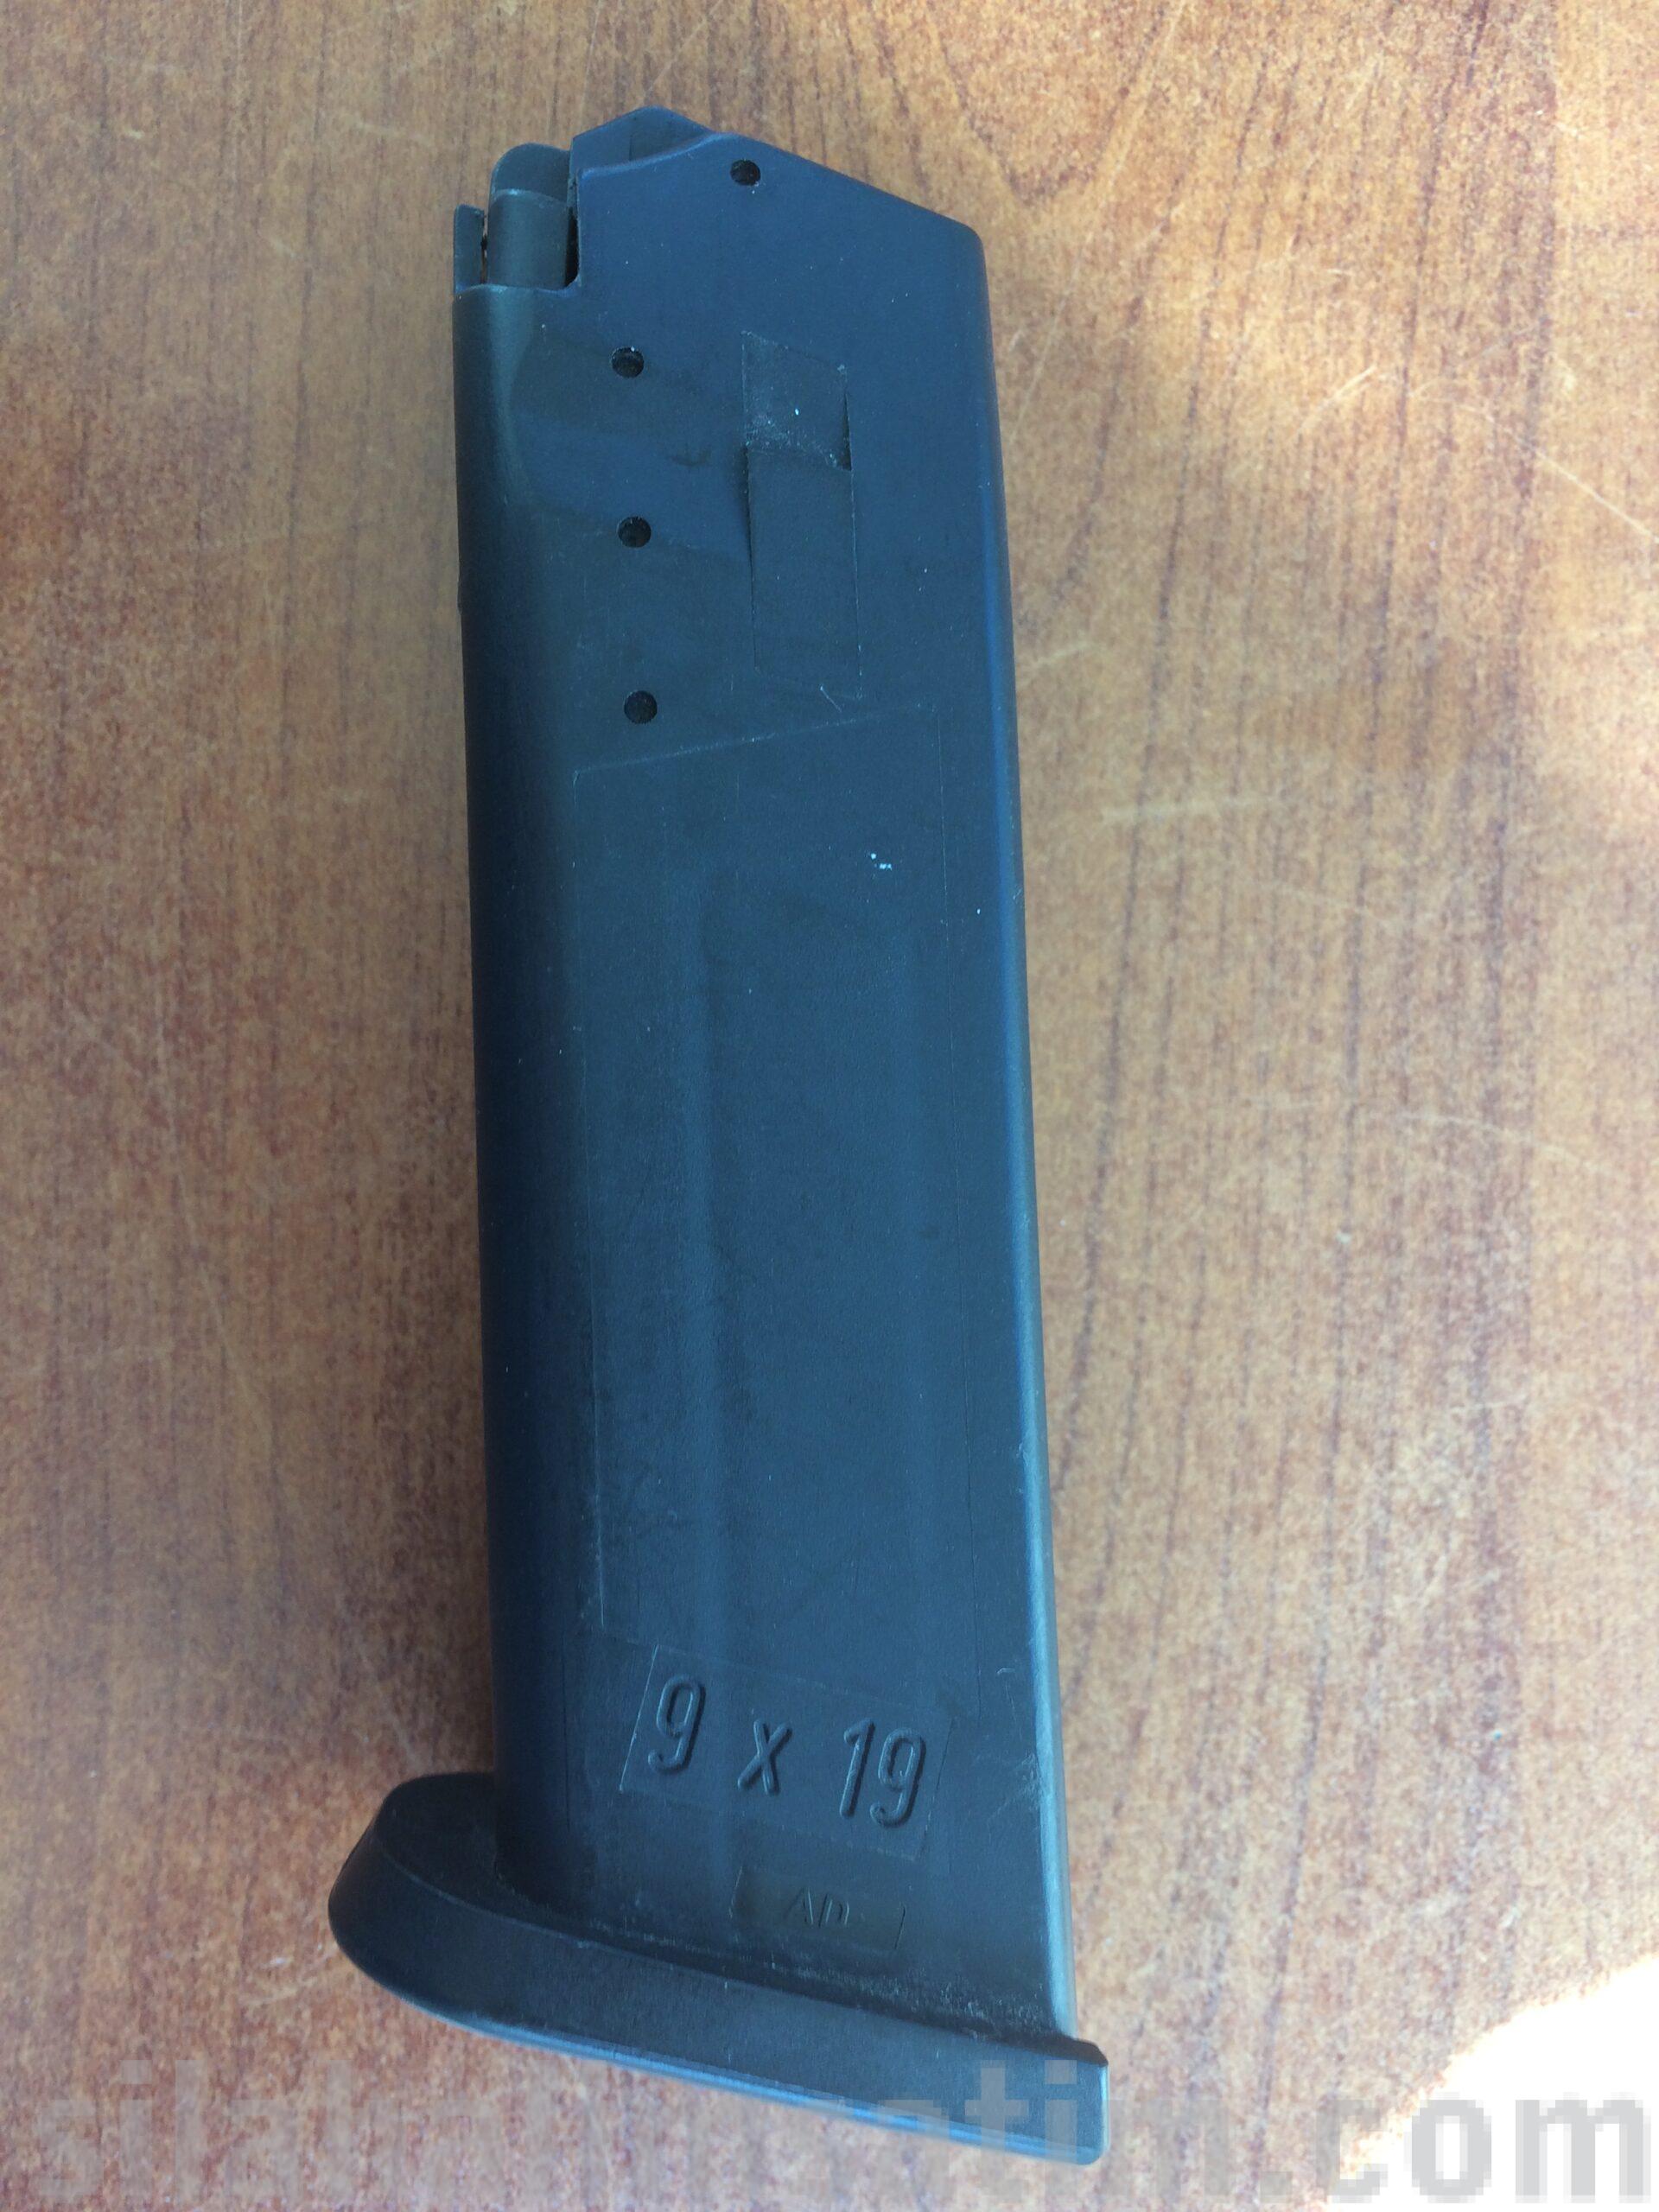 HK USP 9mm şarjörü(standart boy)